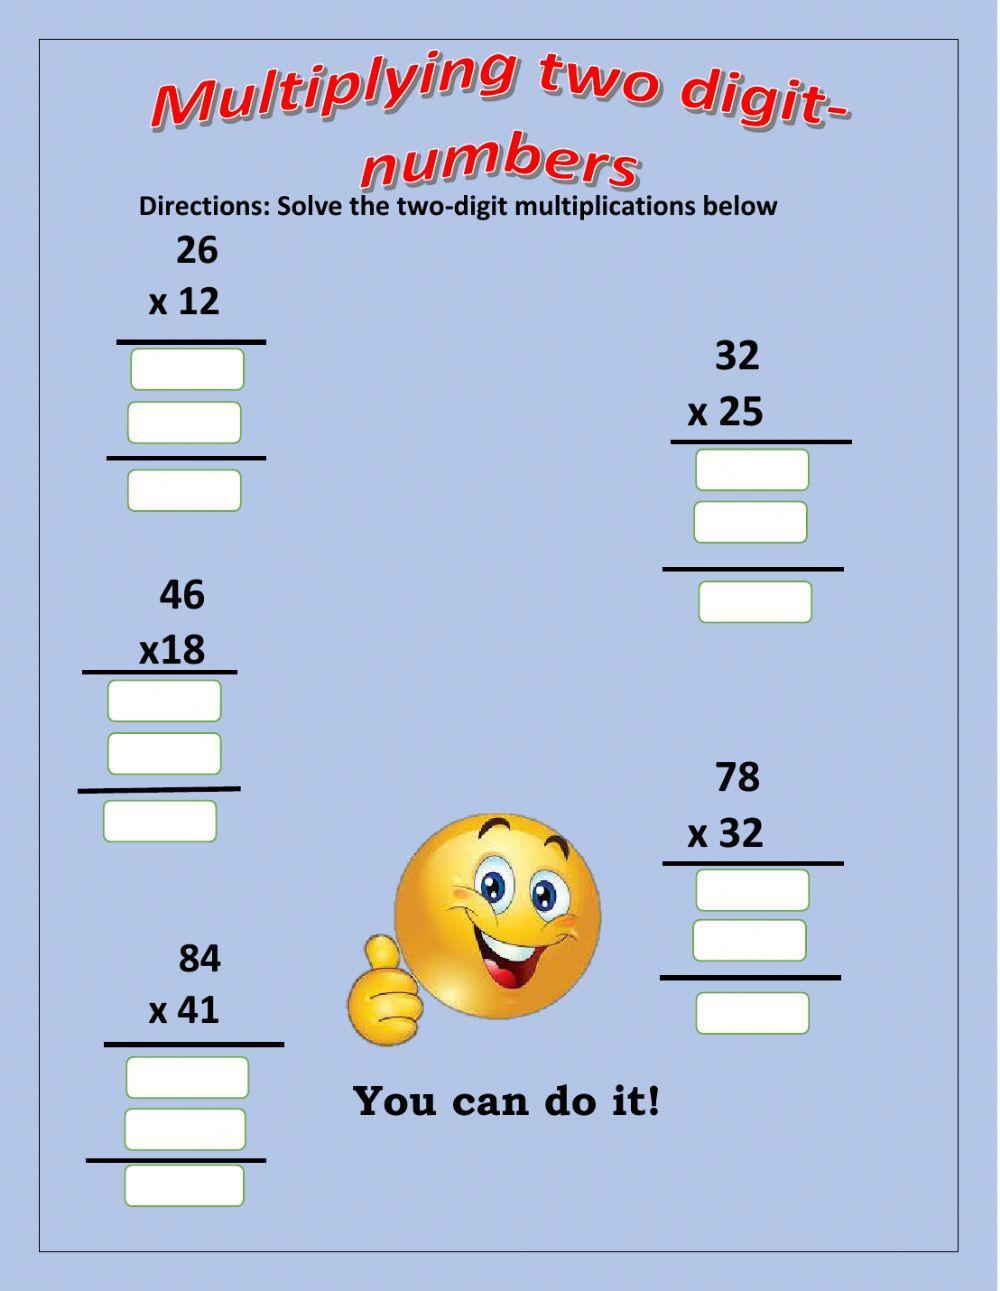 Multiplying Two-digit numbers